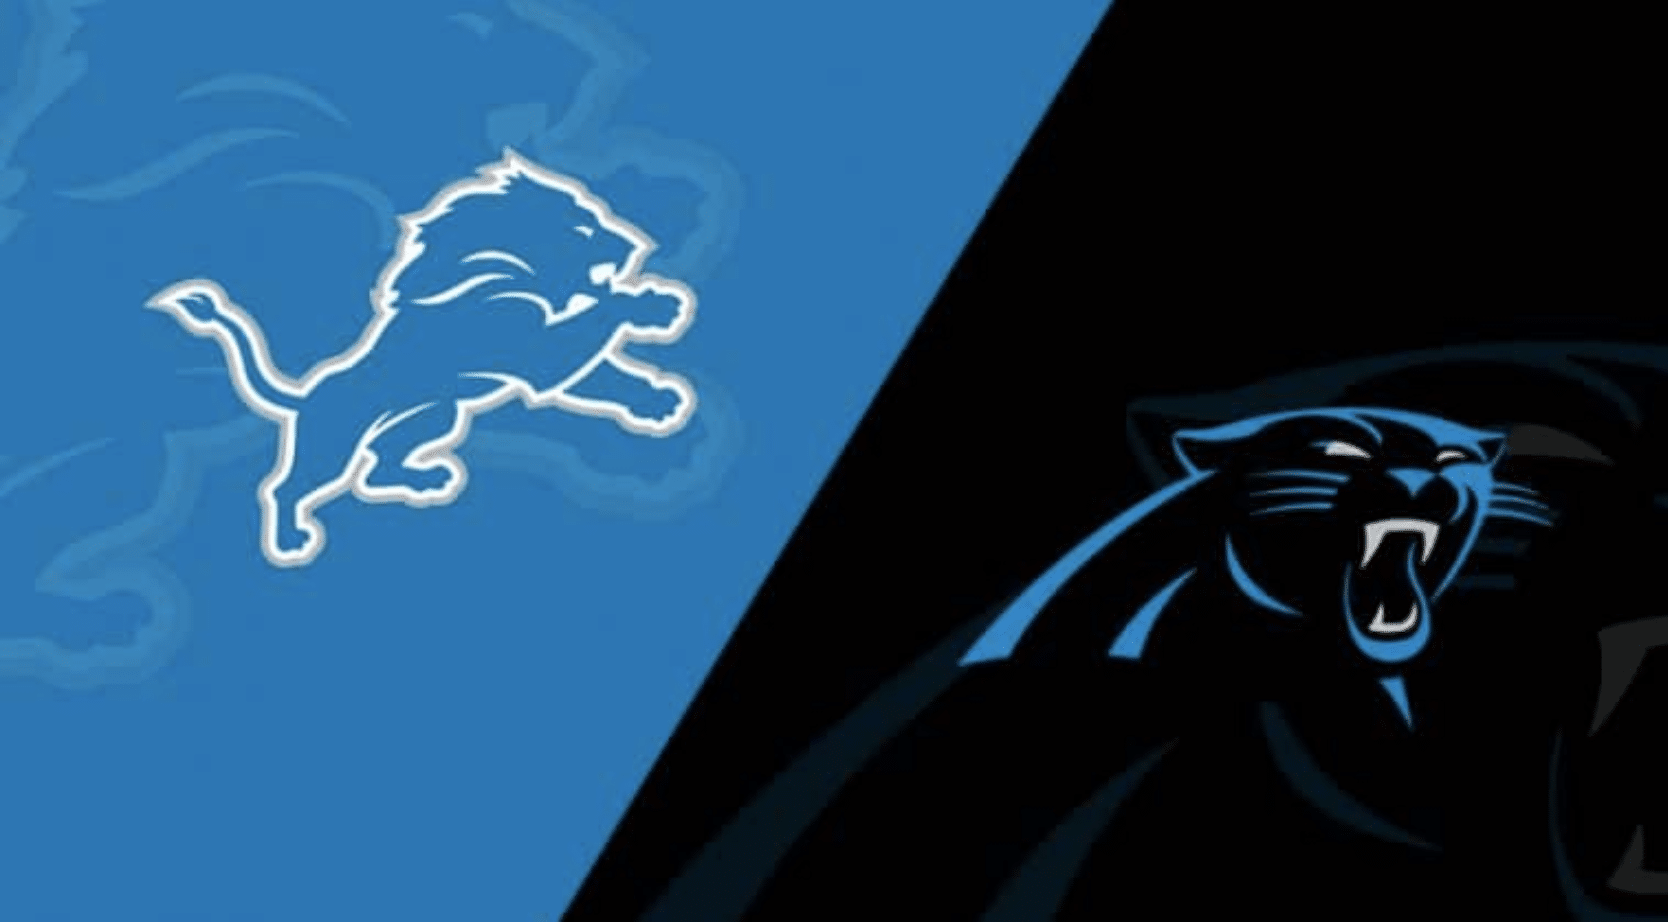 Detroit Lions vs. Carolina Panthers